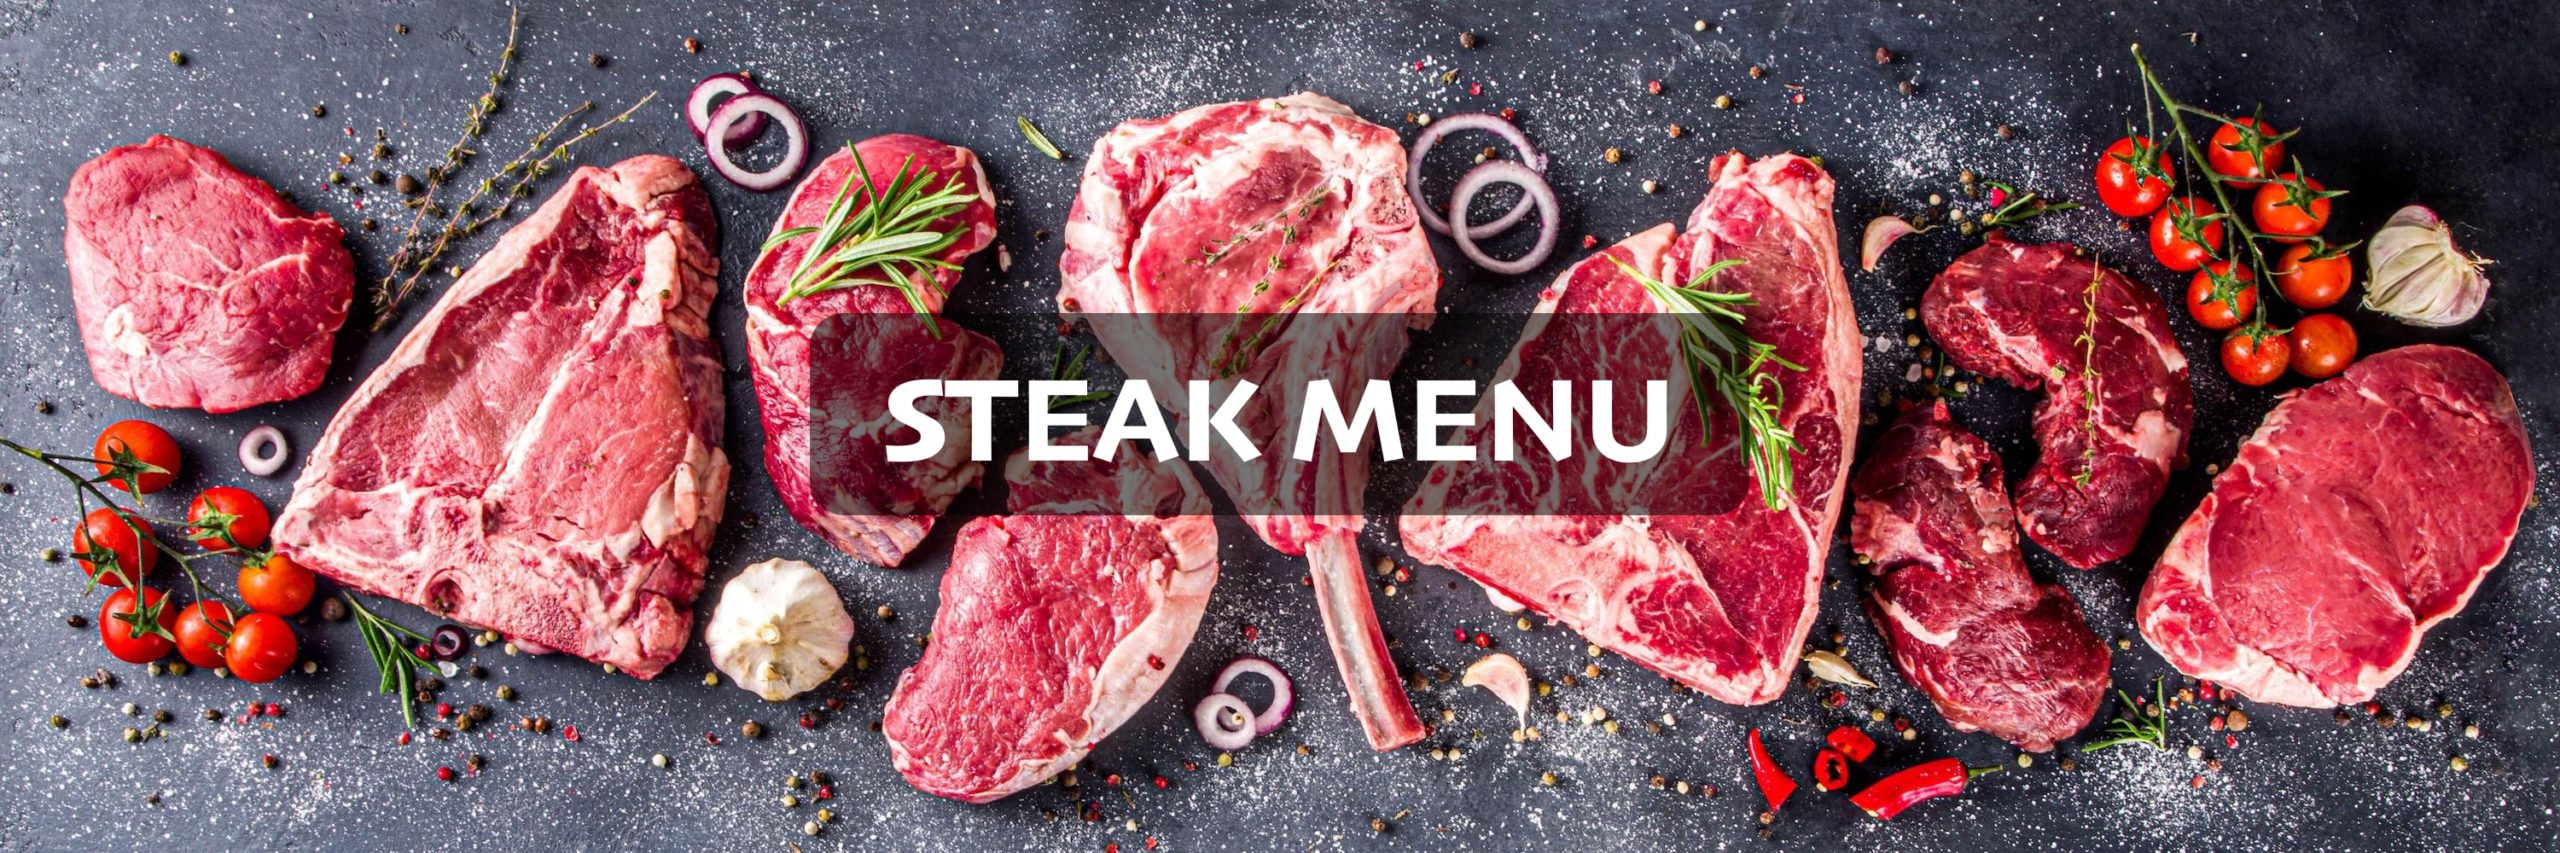 Grillbar_steaky